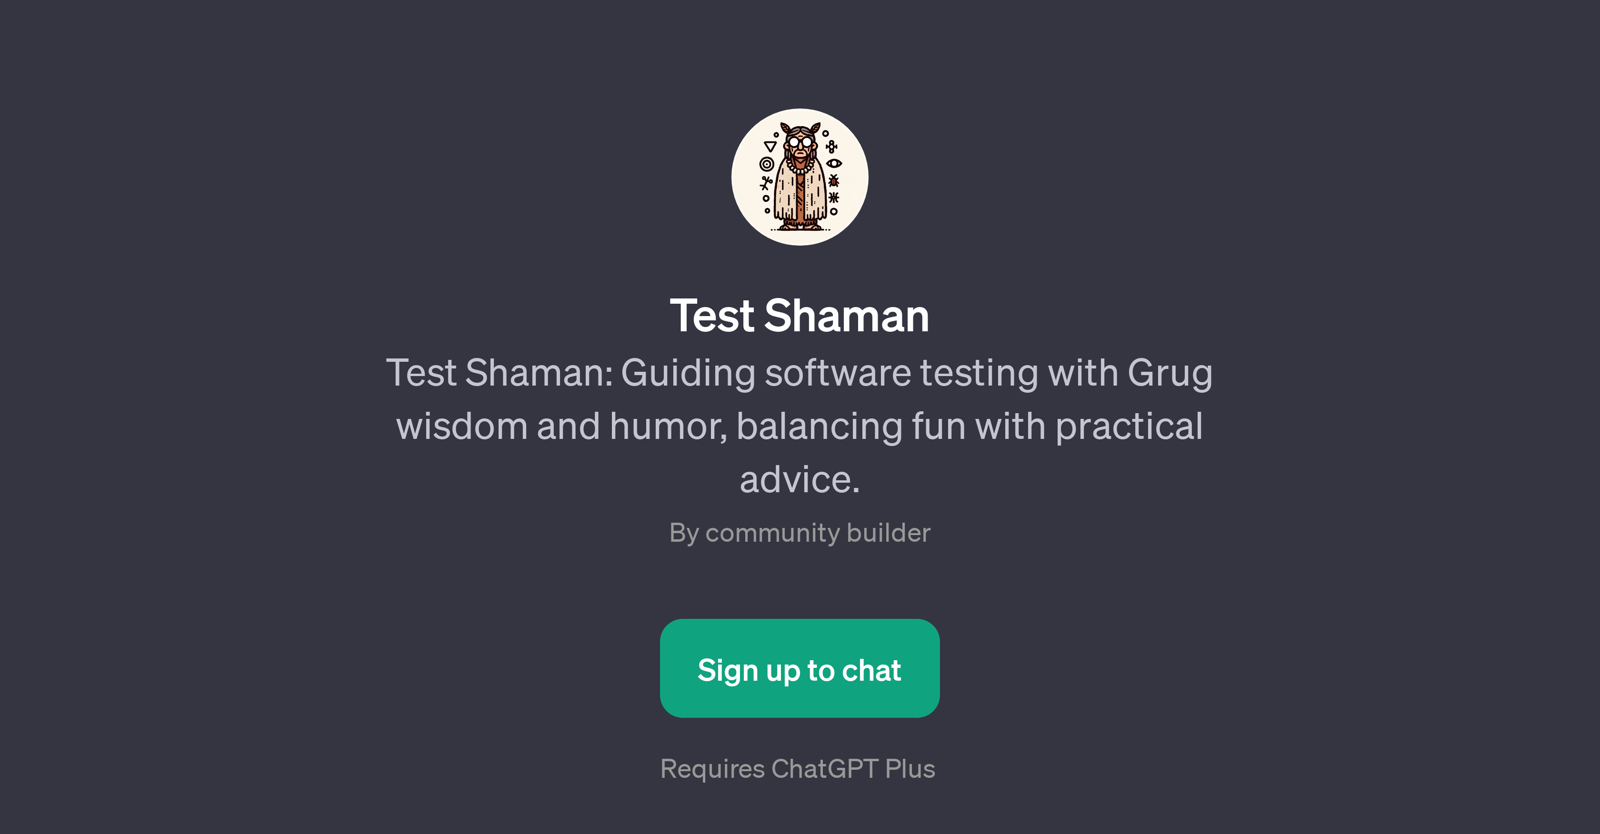 Test Shaman website